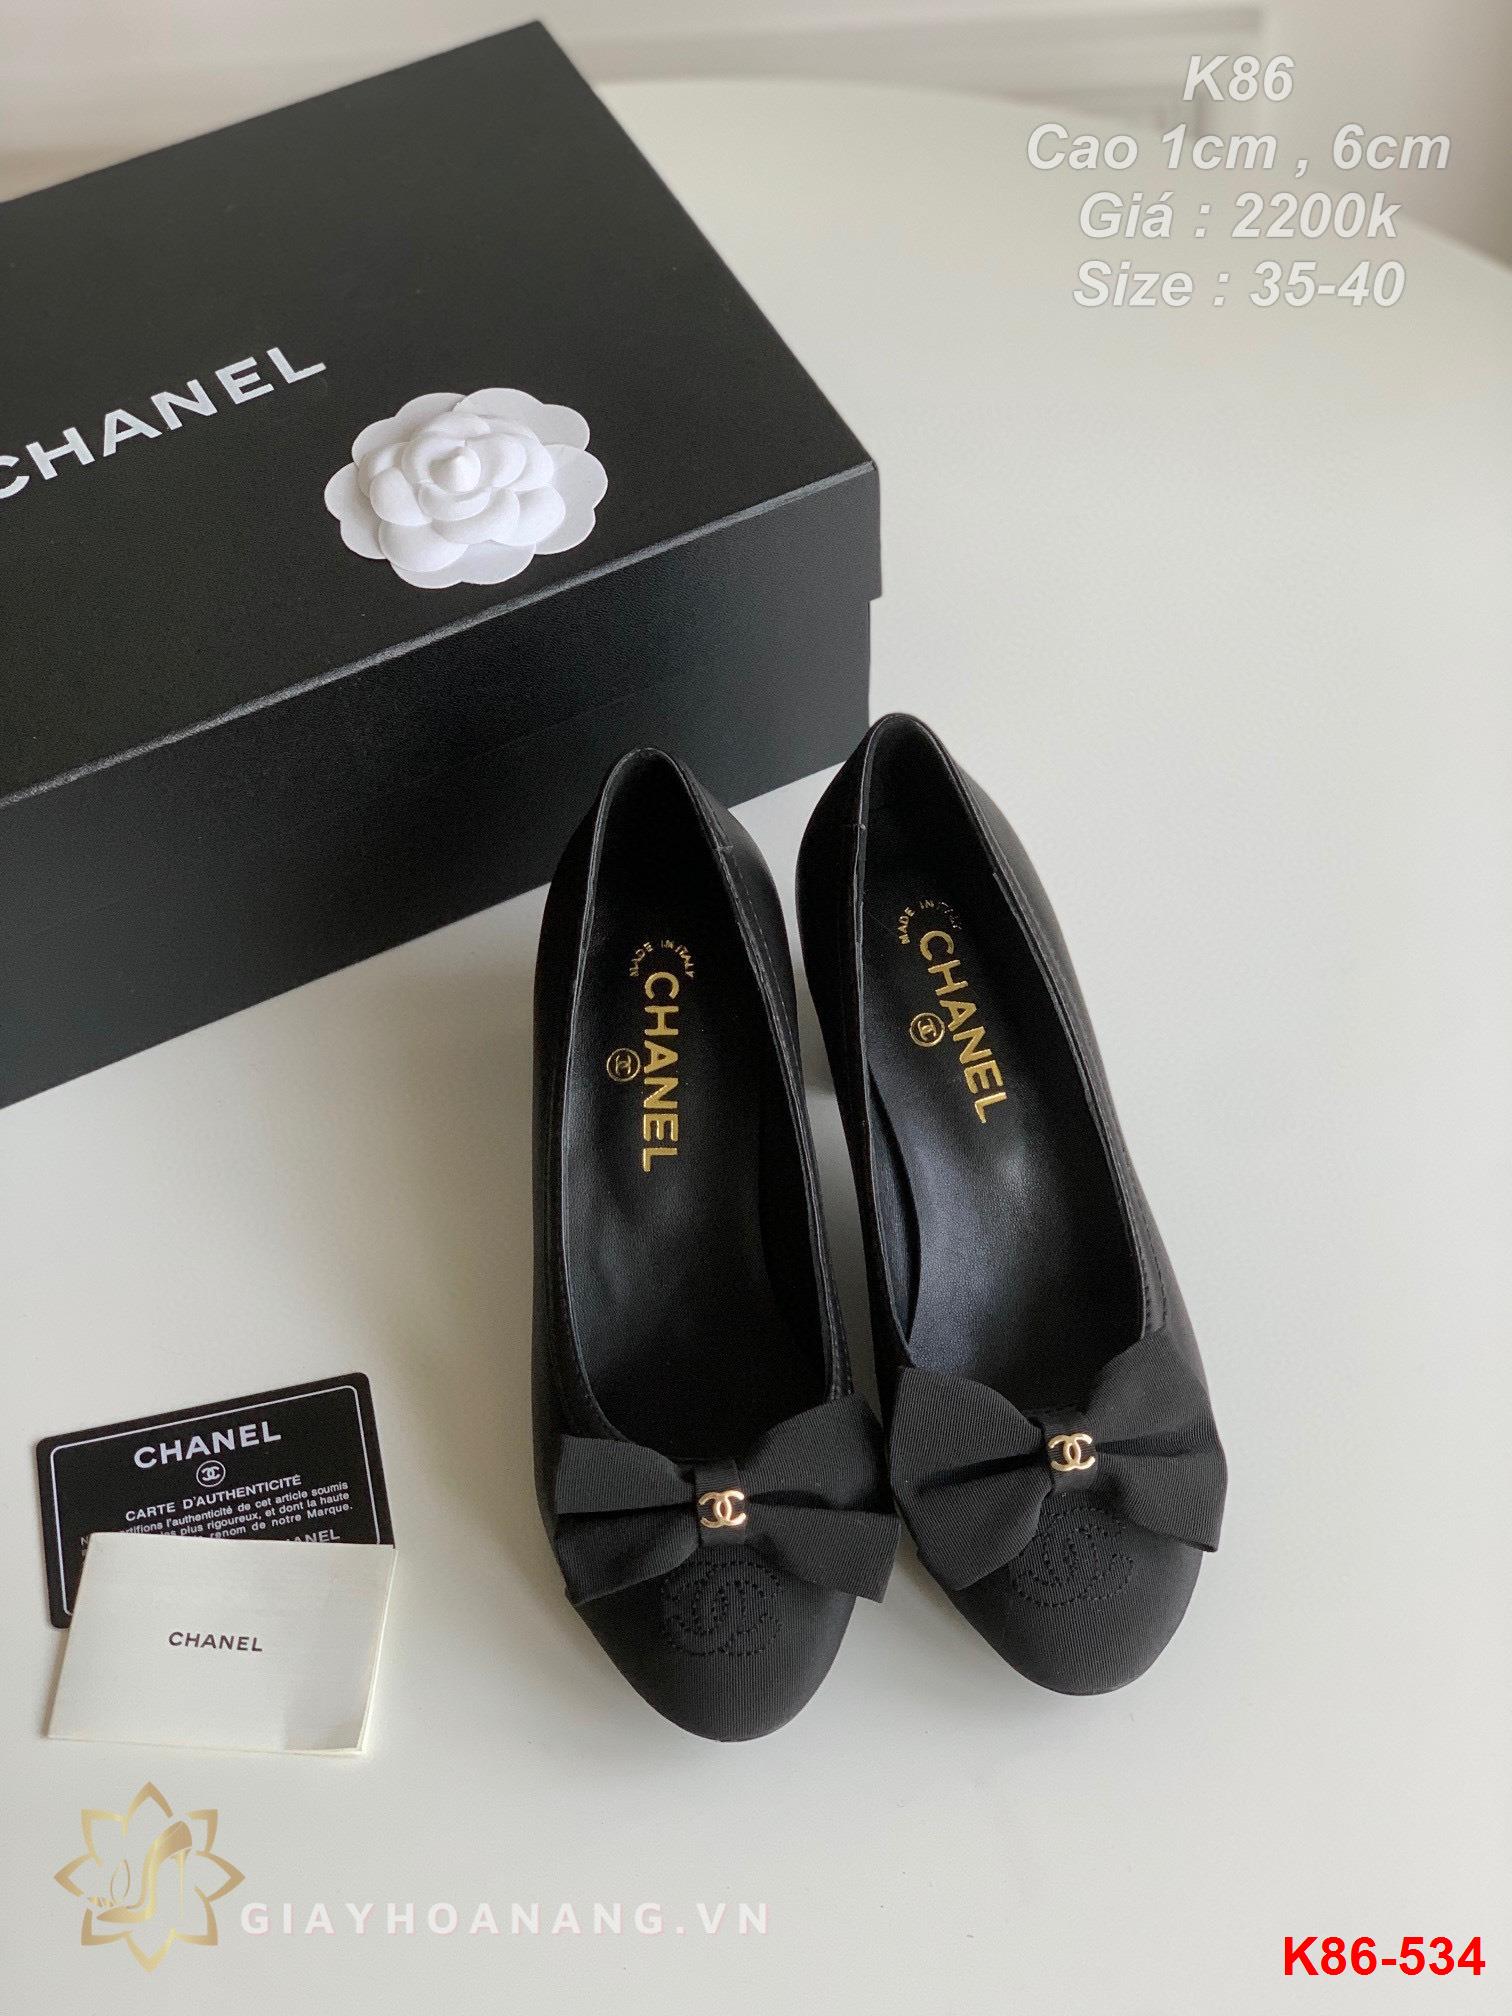 K86-534 Chanel giày cao 1cm , 6cm siêu cấp